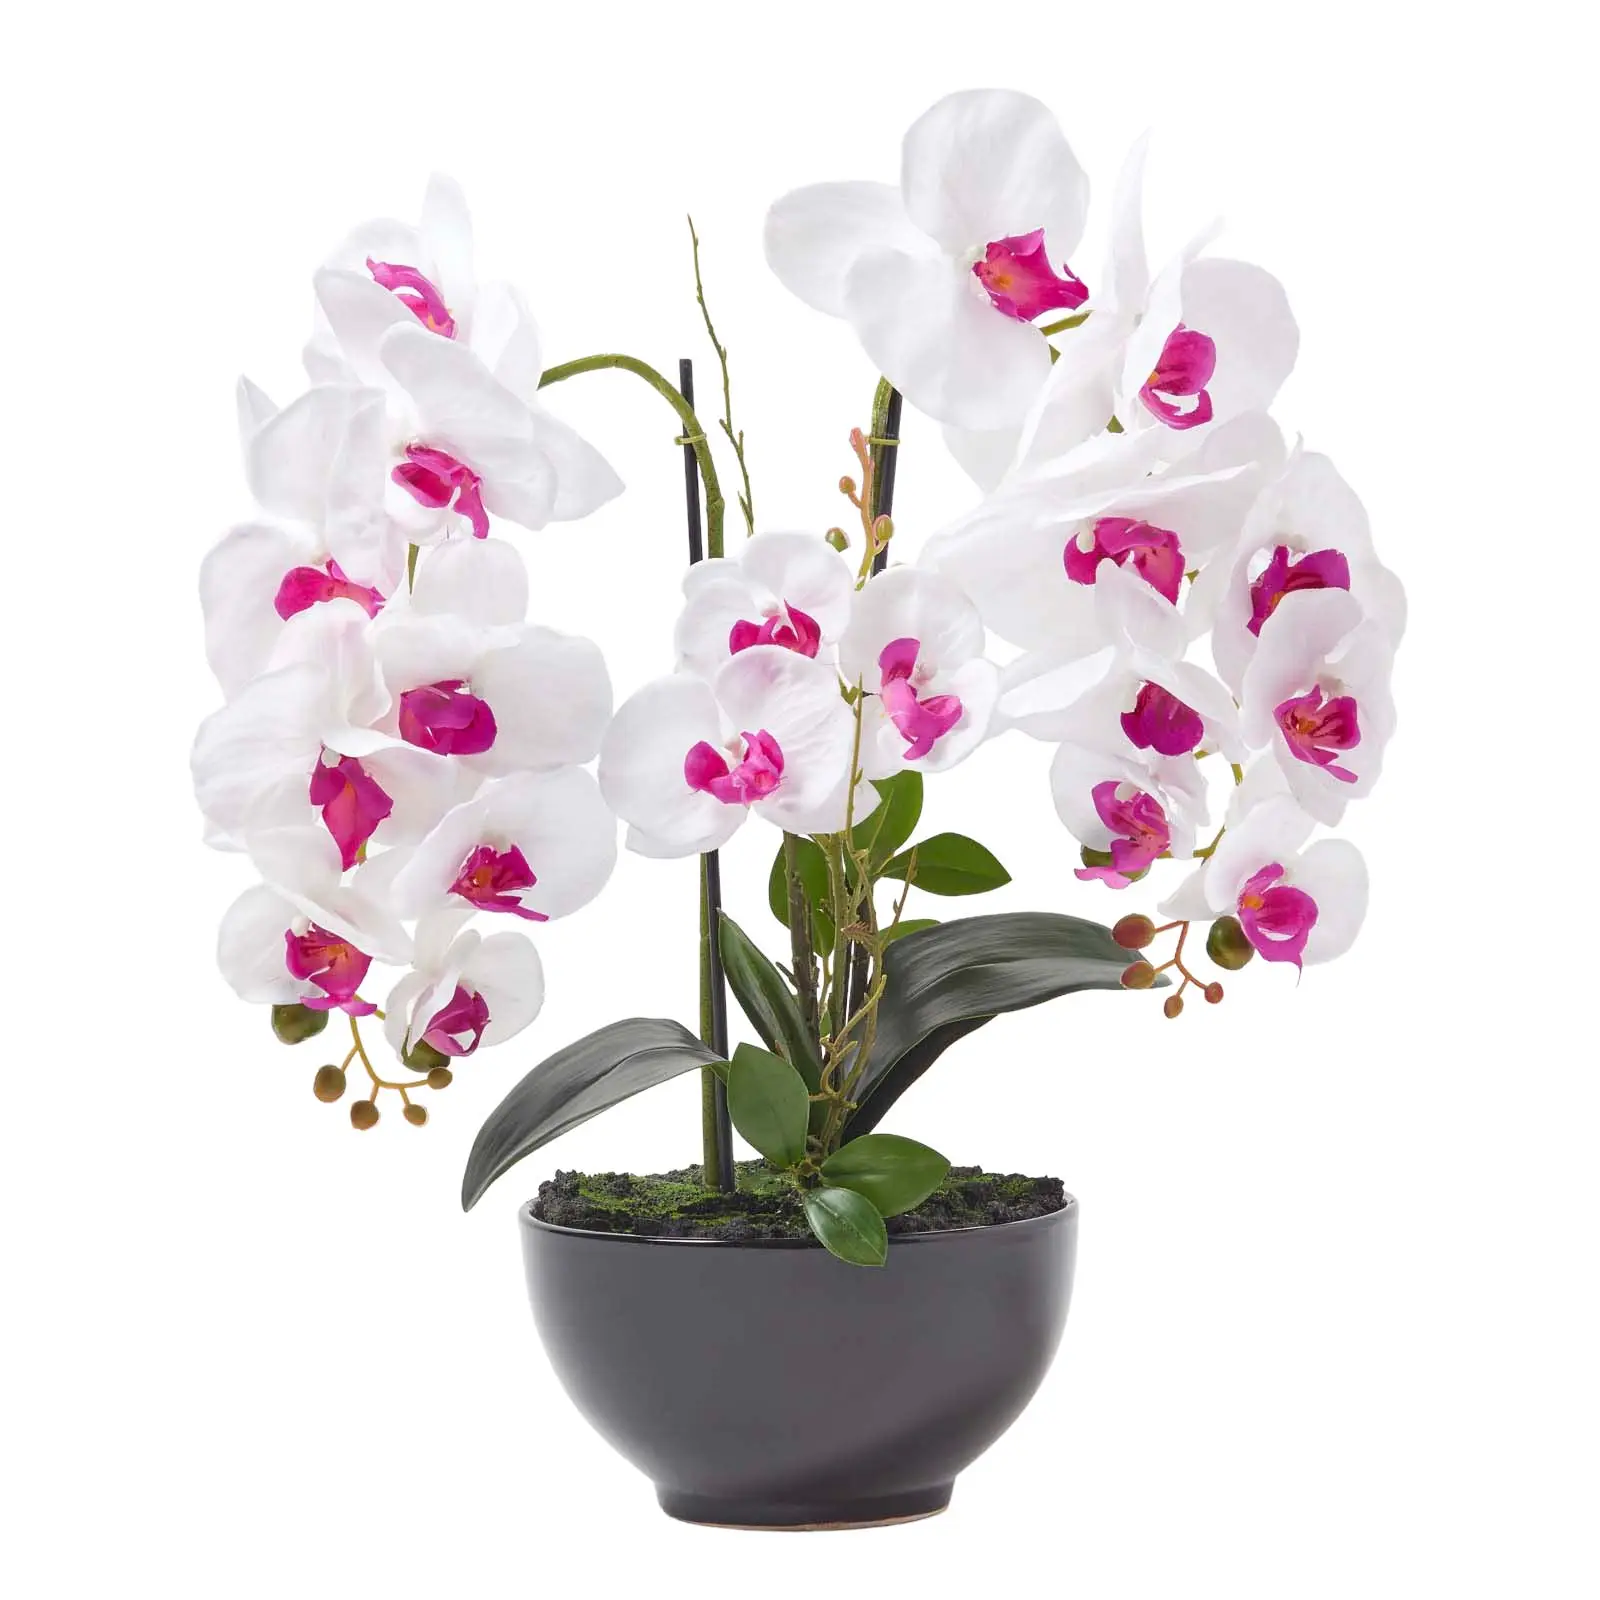 K眉nstliche wei脽-pinke Phalaenopsis